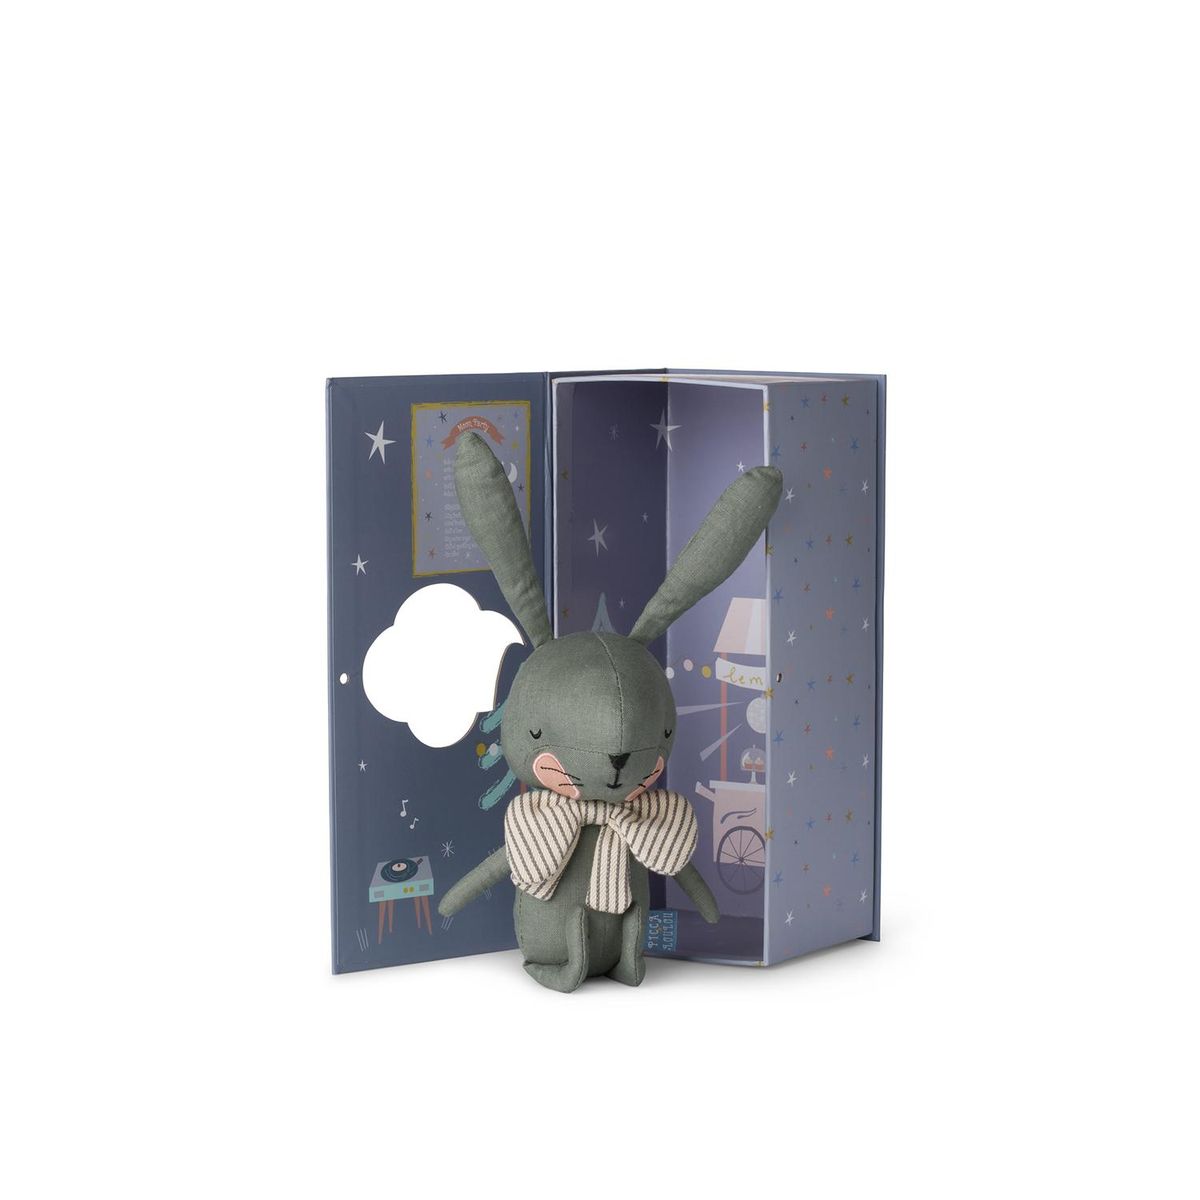 Miffy zeka Green 18cm in giftbox 